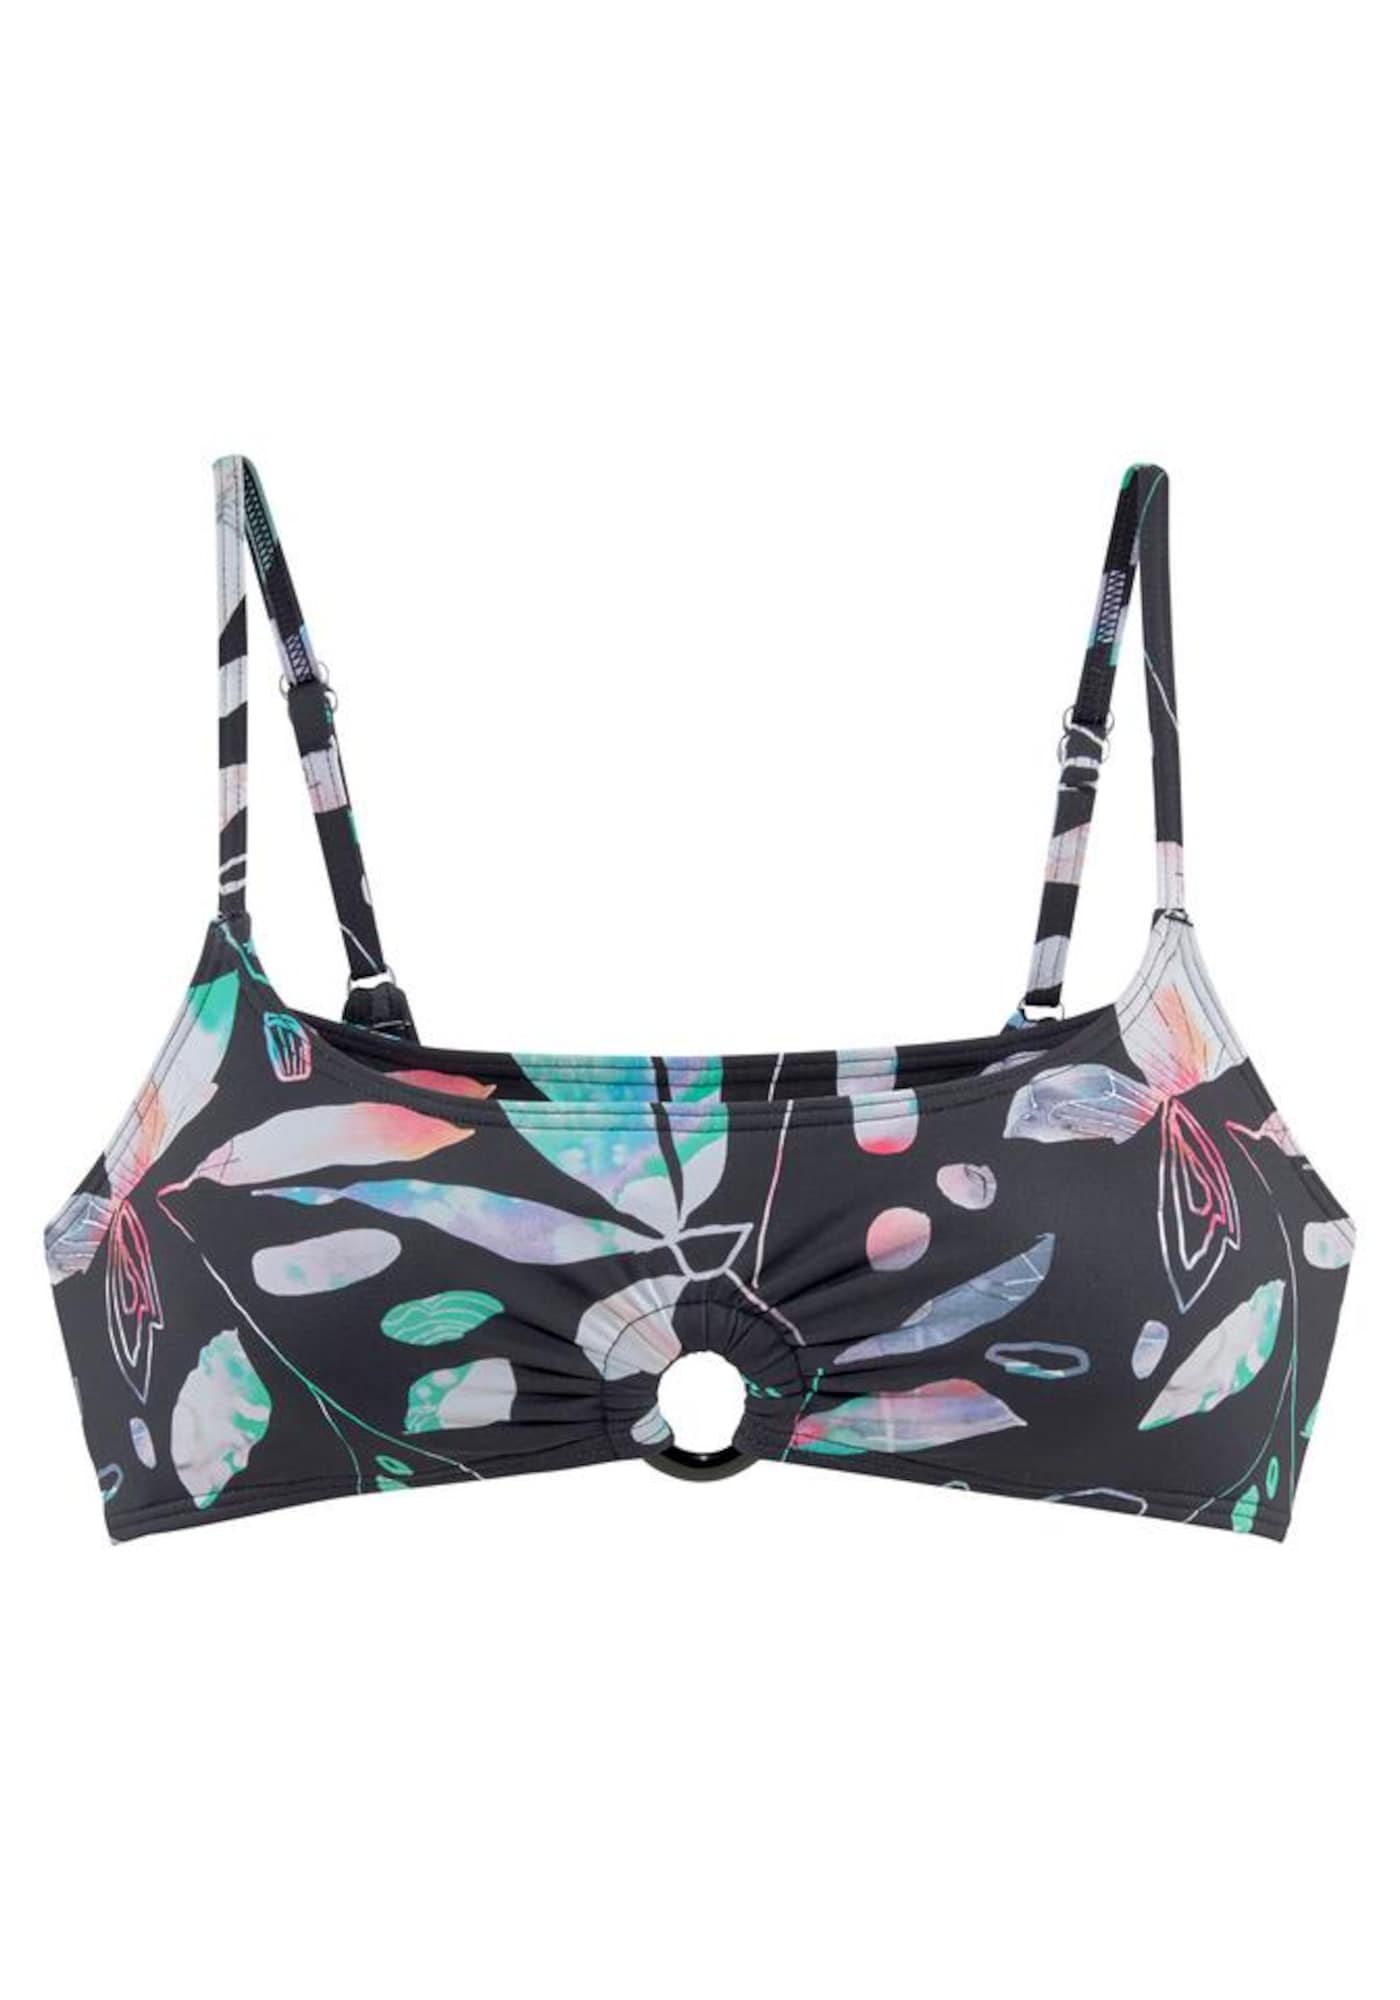 SUNSEEKER Top per bikini 'Leaves' Colori Misti